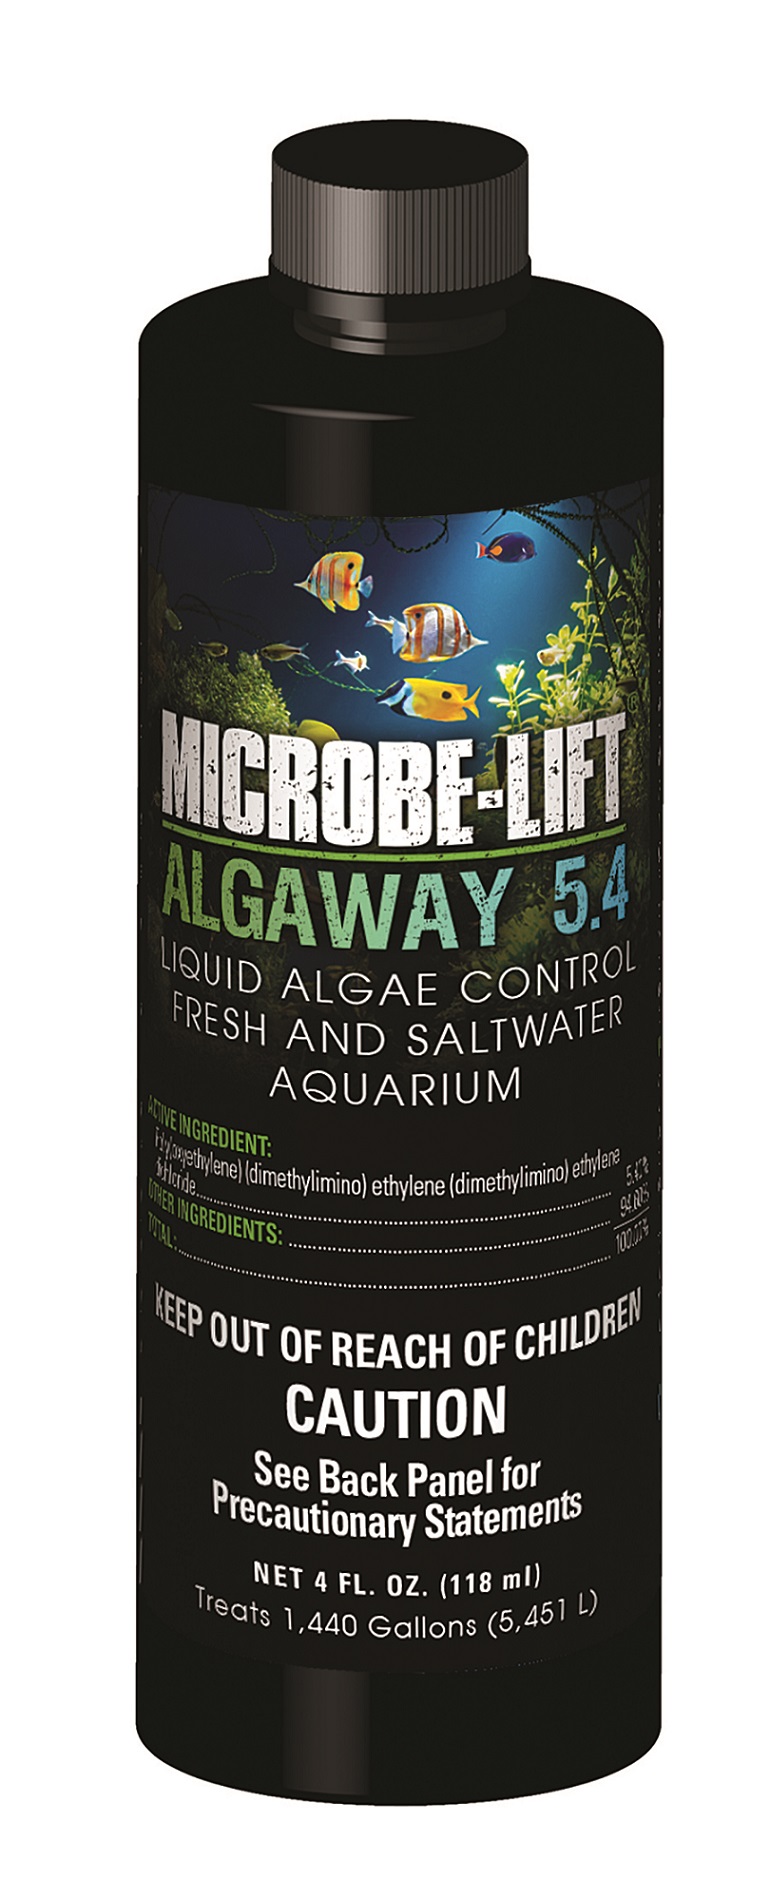 1 GAL Ecological Labs Microbe-Lift algaway-5,4 